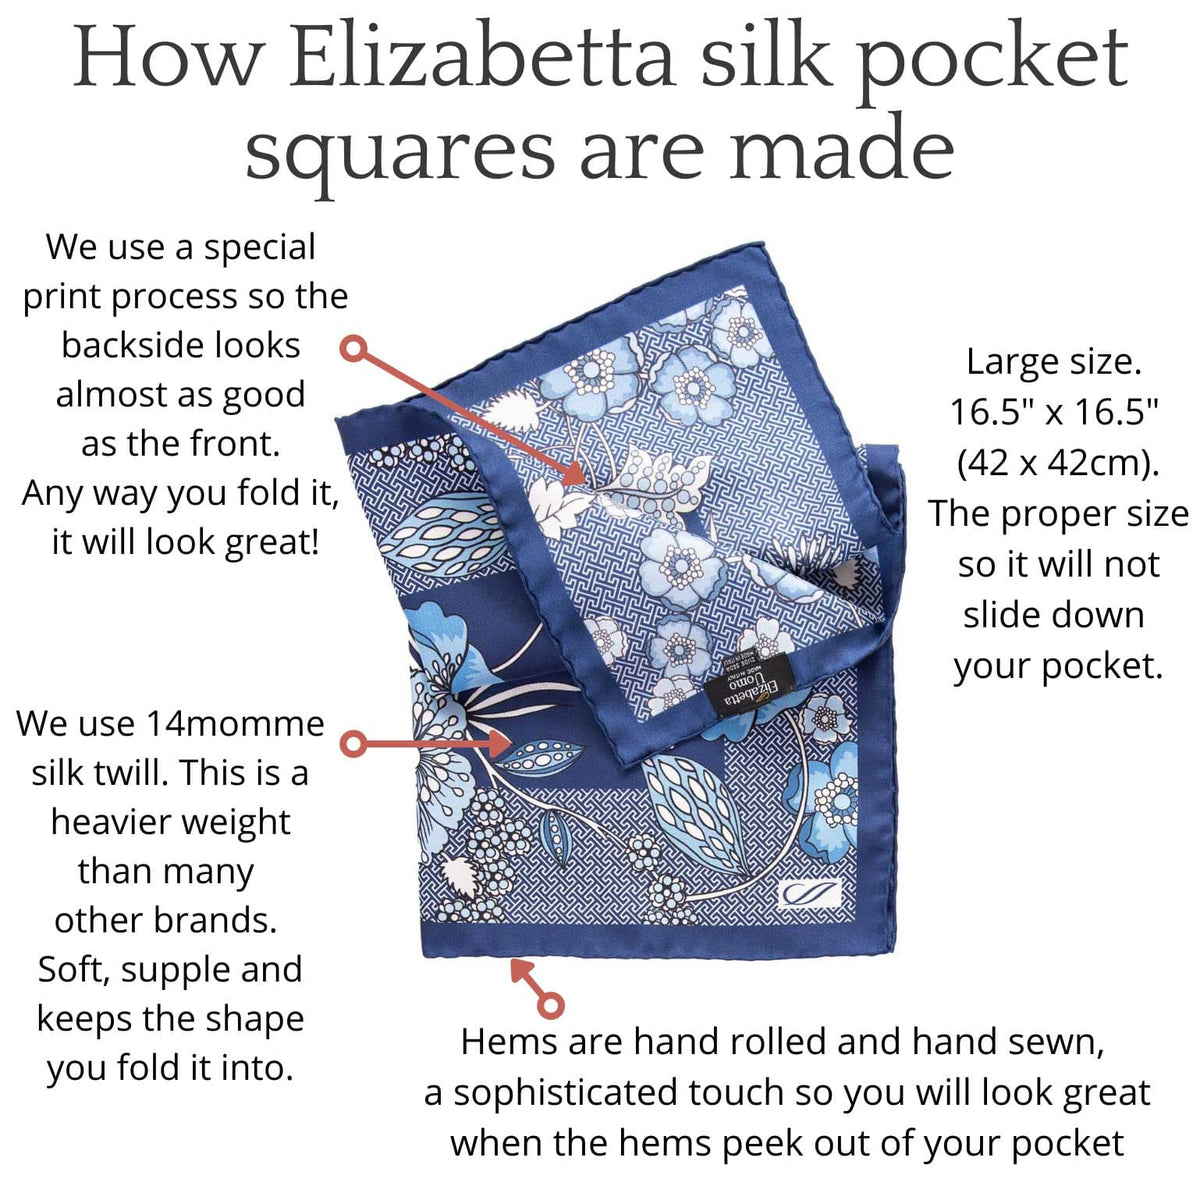 How Elizabetta Italian silk pocket squares are made